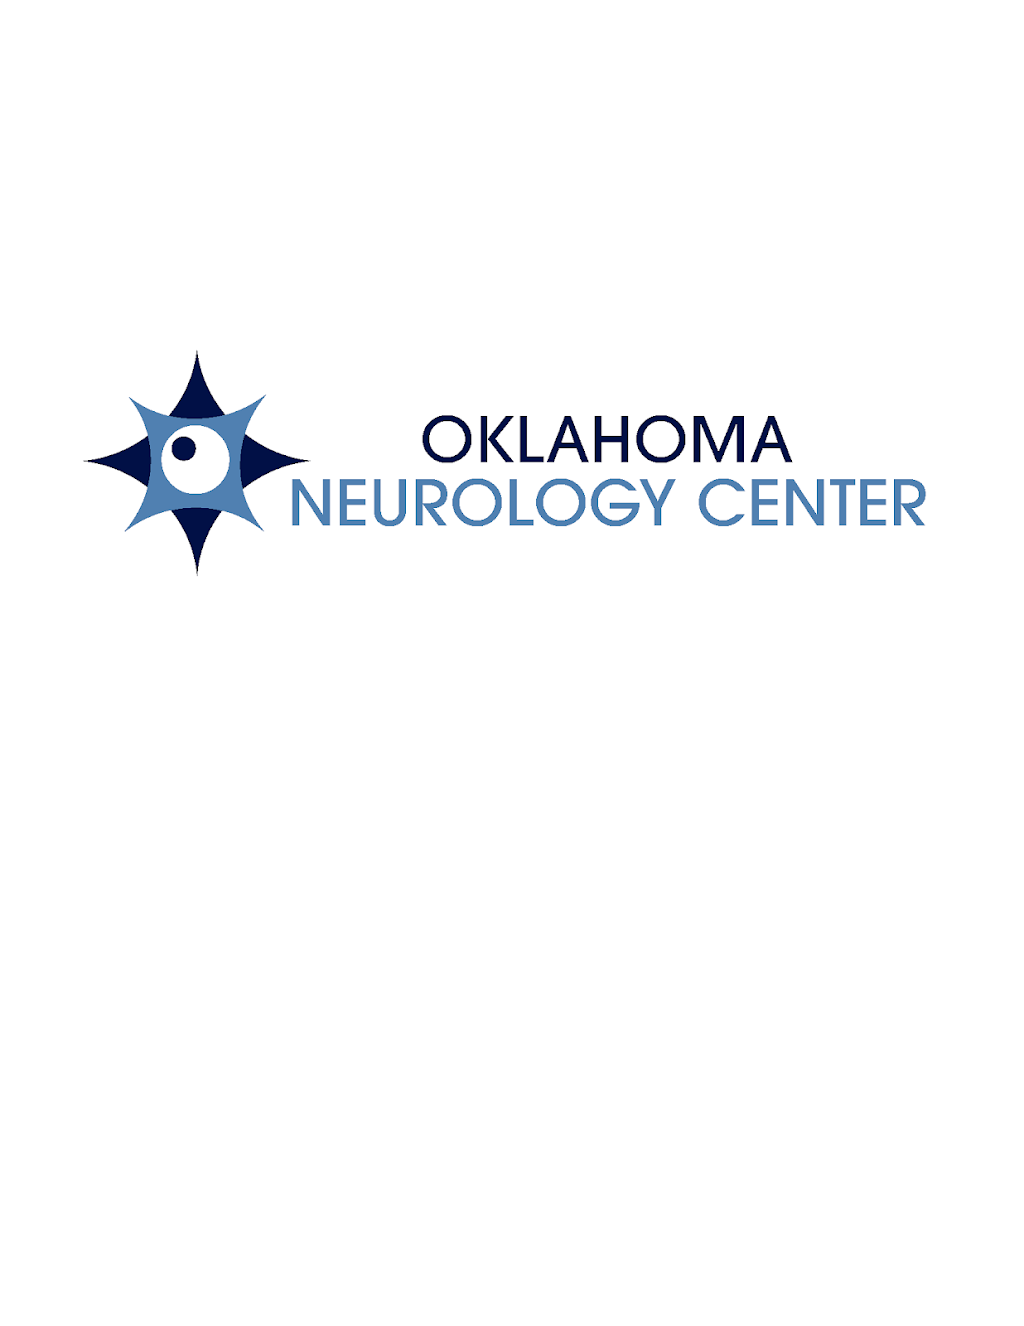 Oklahoma Neurology Center | 1705 Renaissance Blvd Suite 120, Edmond, OK 73013, USA | Phone: (405) 726-9855